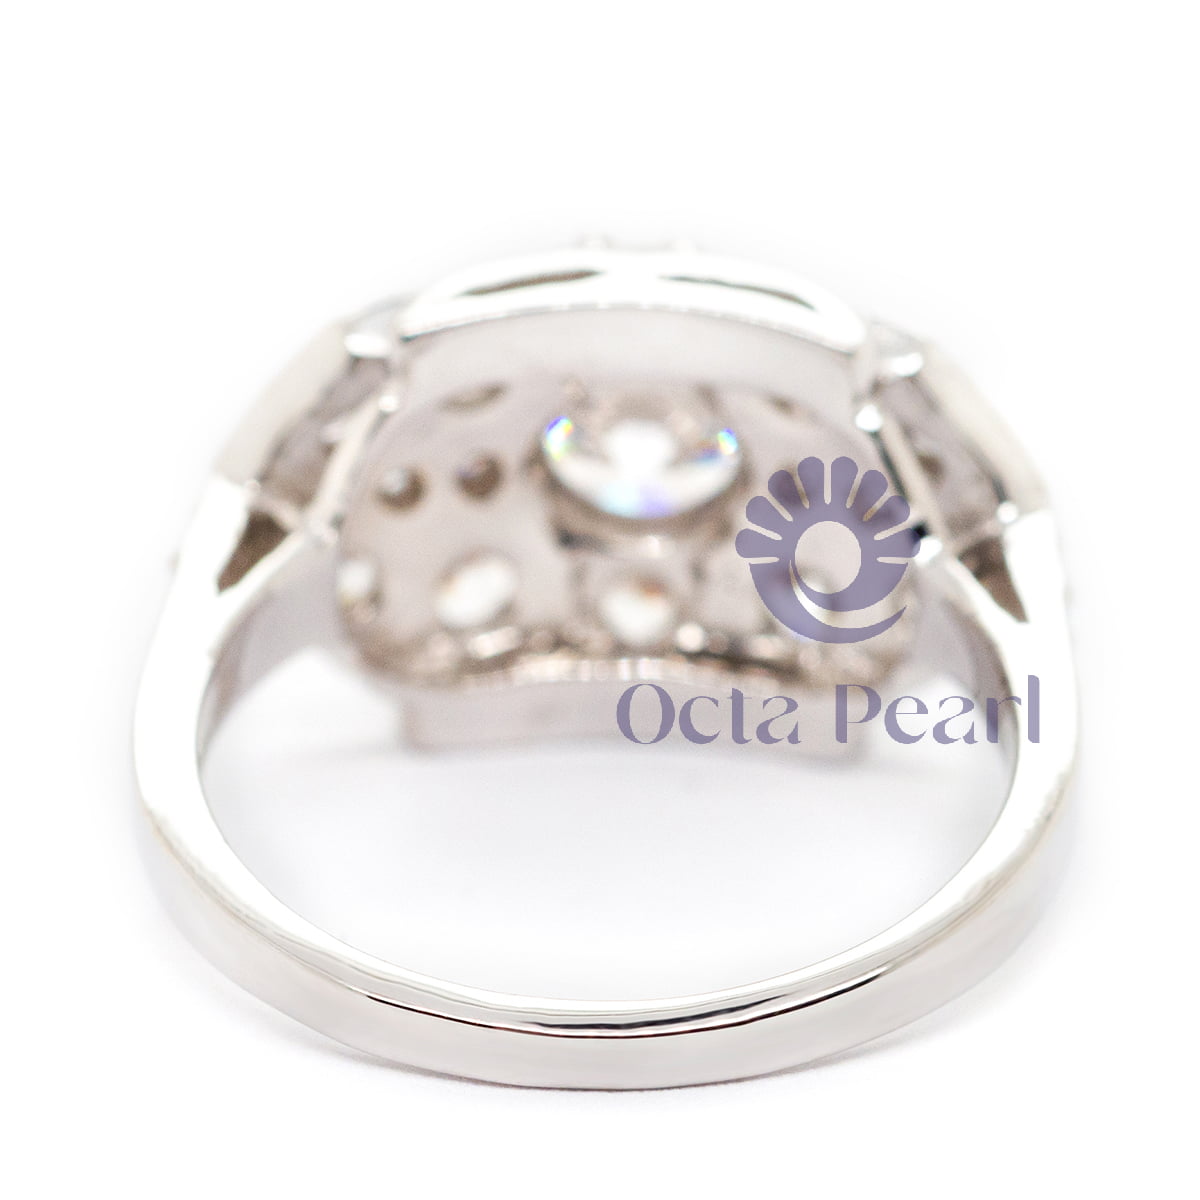 Round Cut Moissanite Milgrain Wedding Engagement Ring For Ladies (2 3/10 TCW)